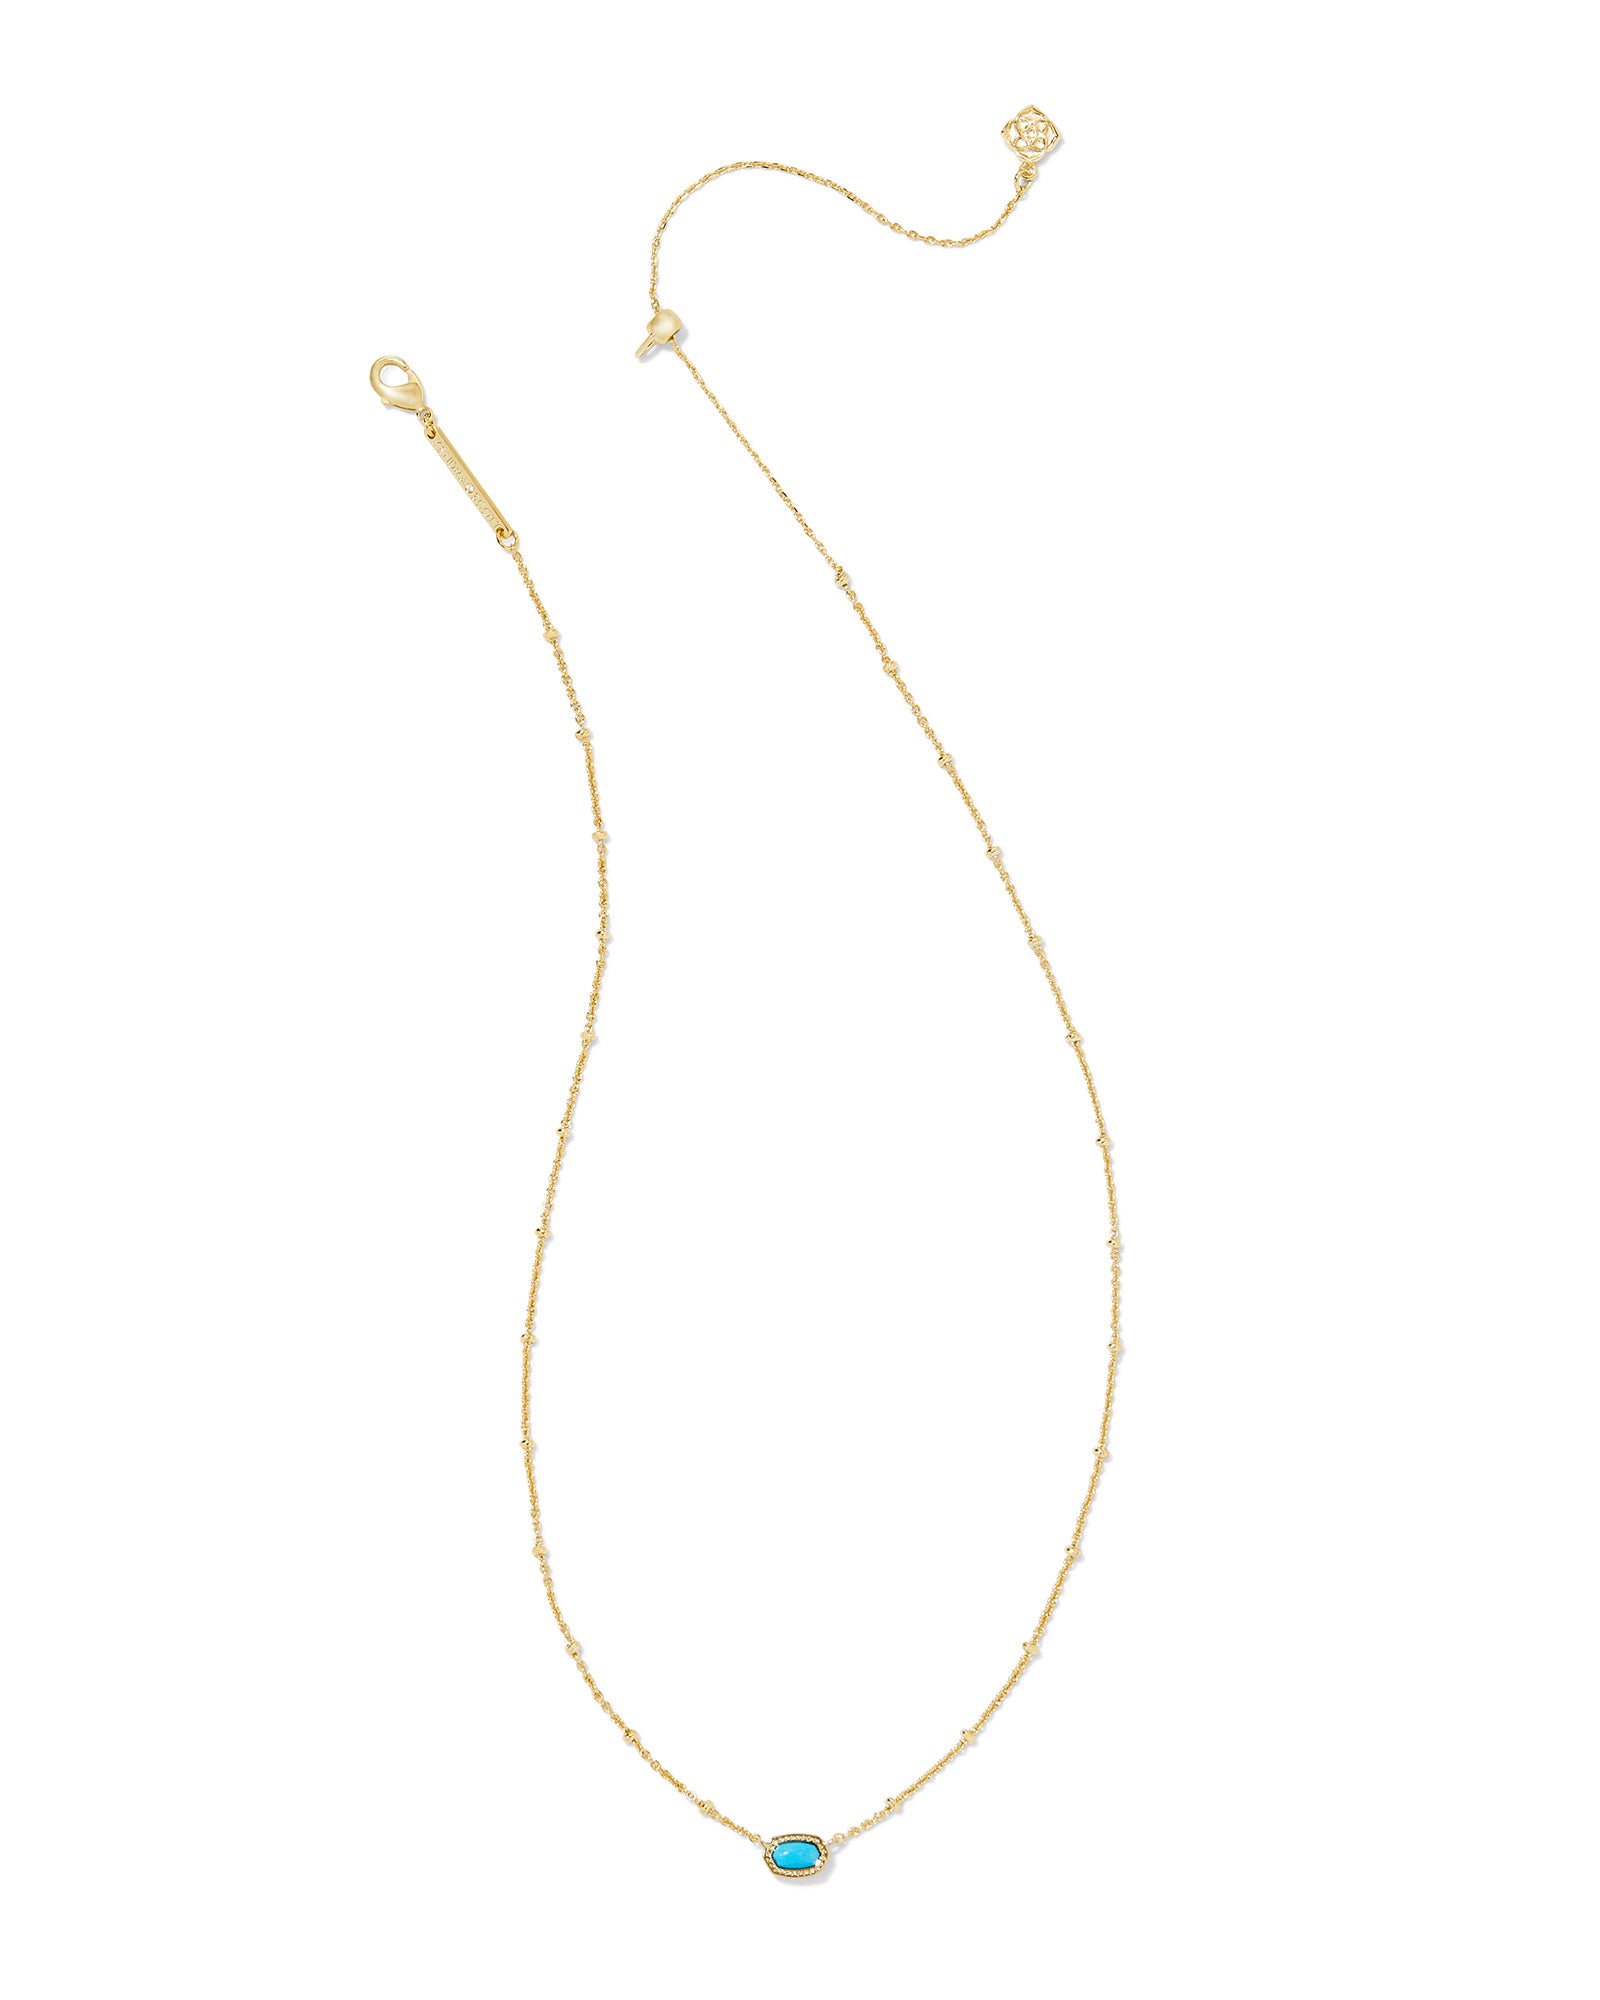 Kendra Scott |  Mini Elisa Gold Satellite Short Pendant Necklace in Turquoise Magnesite - Giddy Up Glamour Boutique